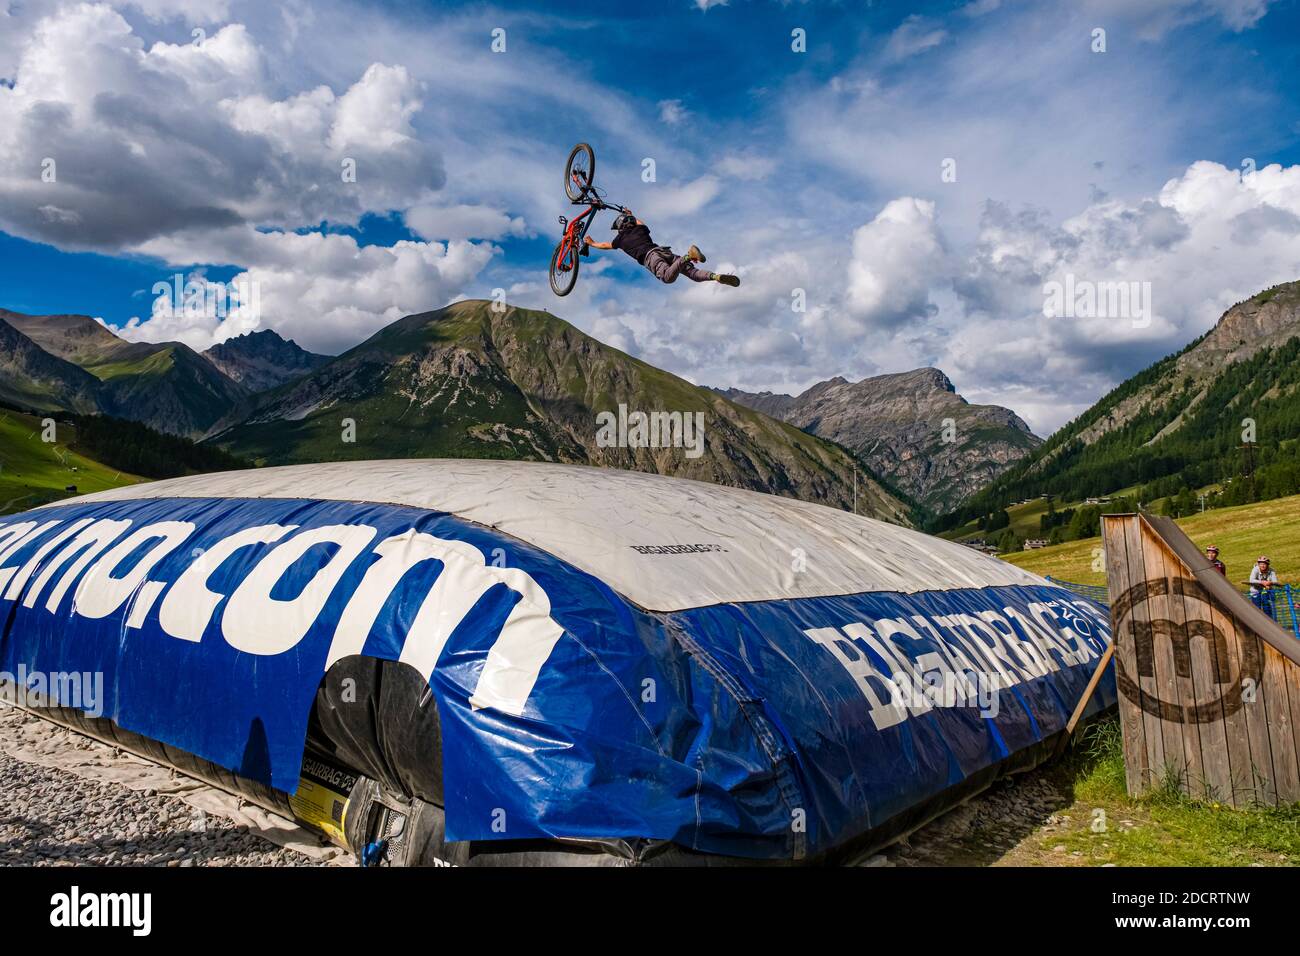 Okemo Adds Air Bag for Jump Training | First Tracks!! Online Ski Magazine